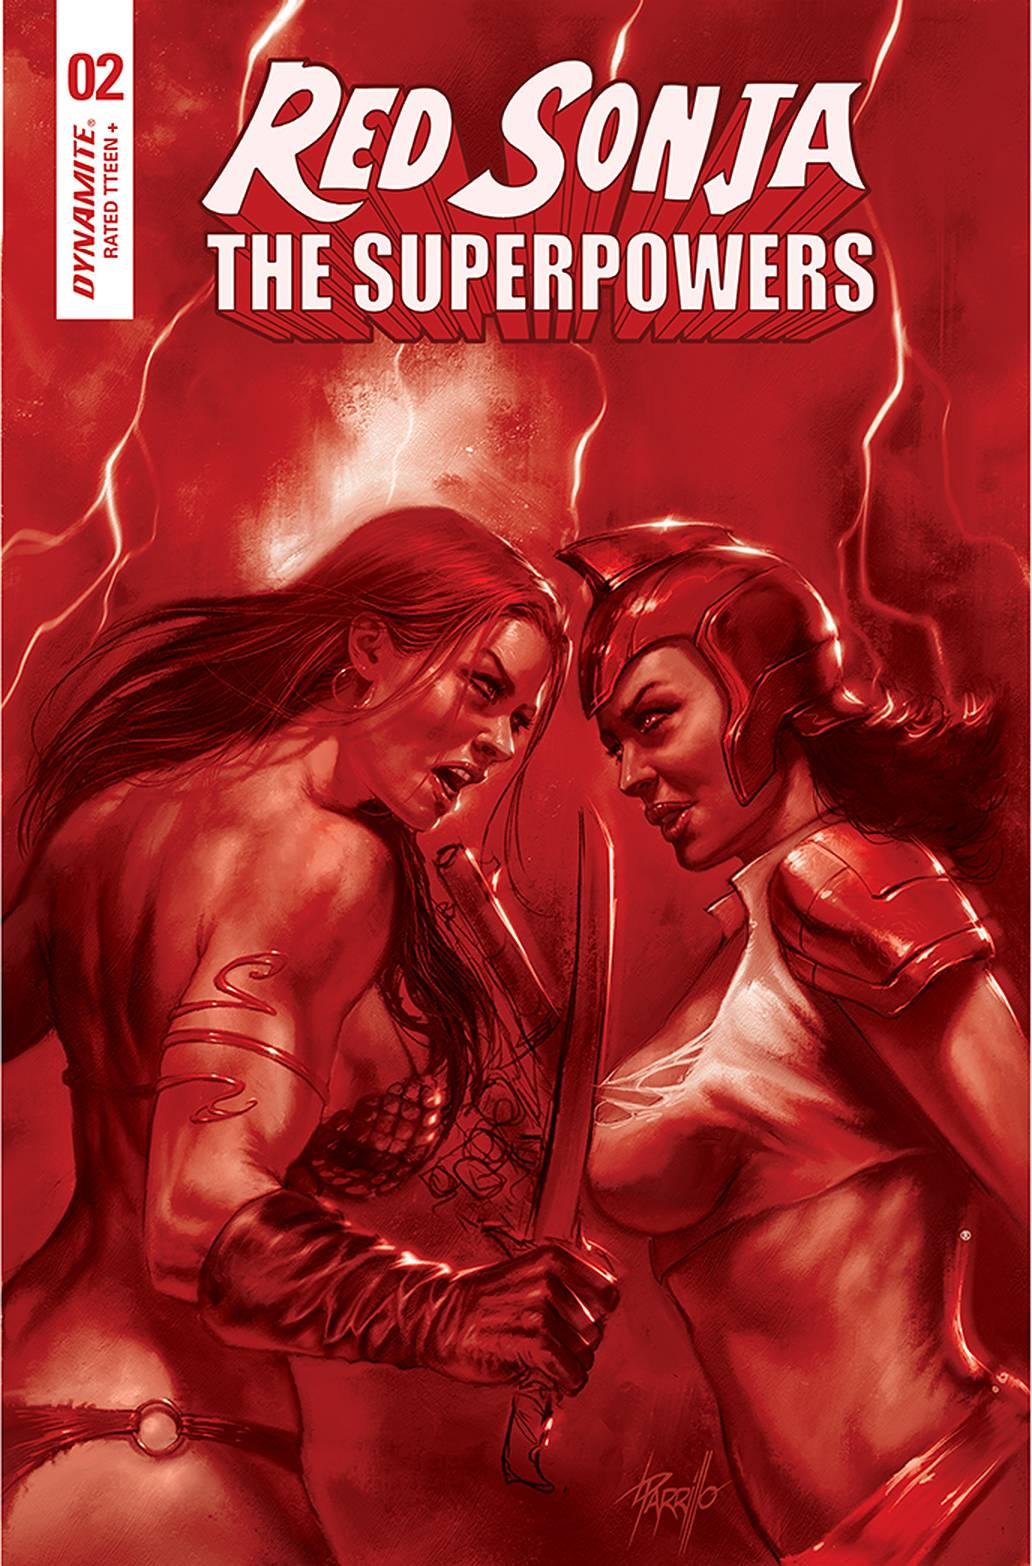 RED SONJA THE SUPERPOWERS #2 PARRILLO CRIMSON RED ART CVR (SHIPS 02-10-21) - PCKComics.com